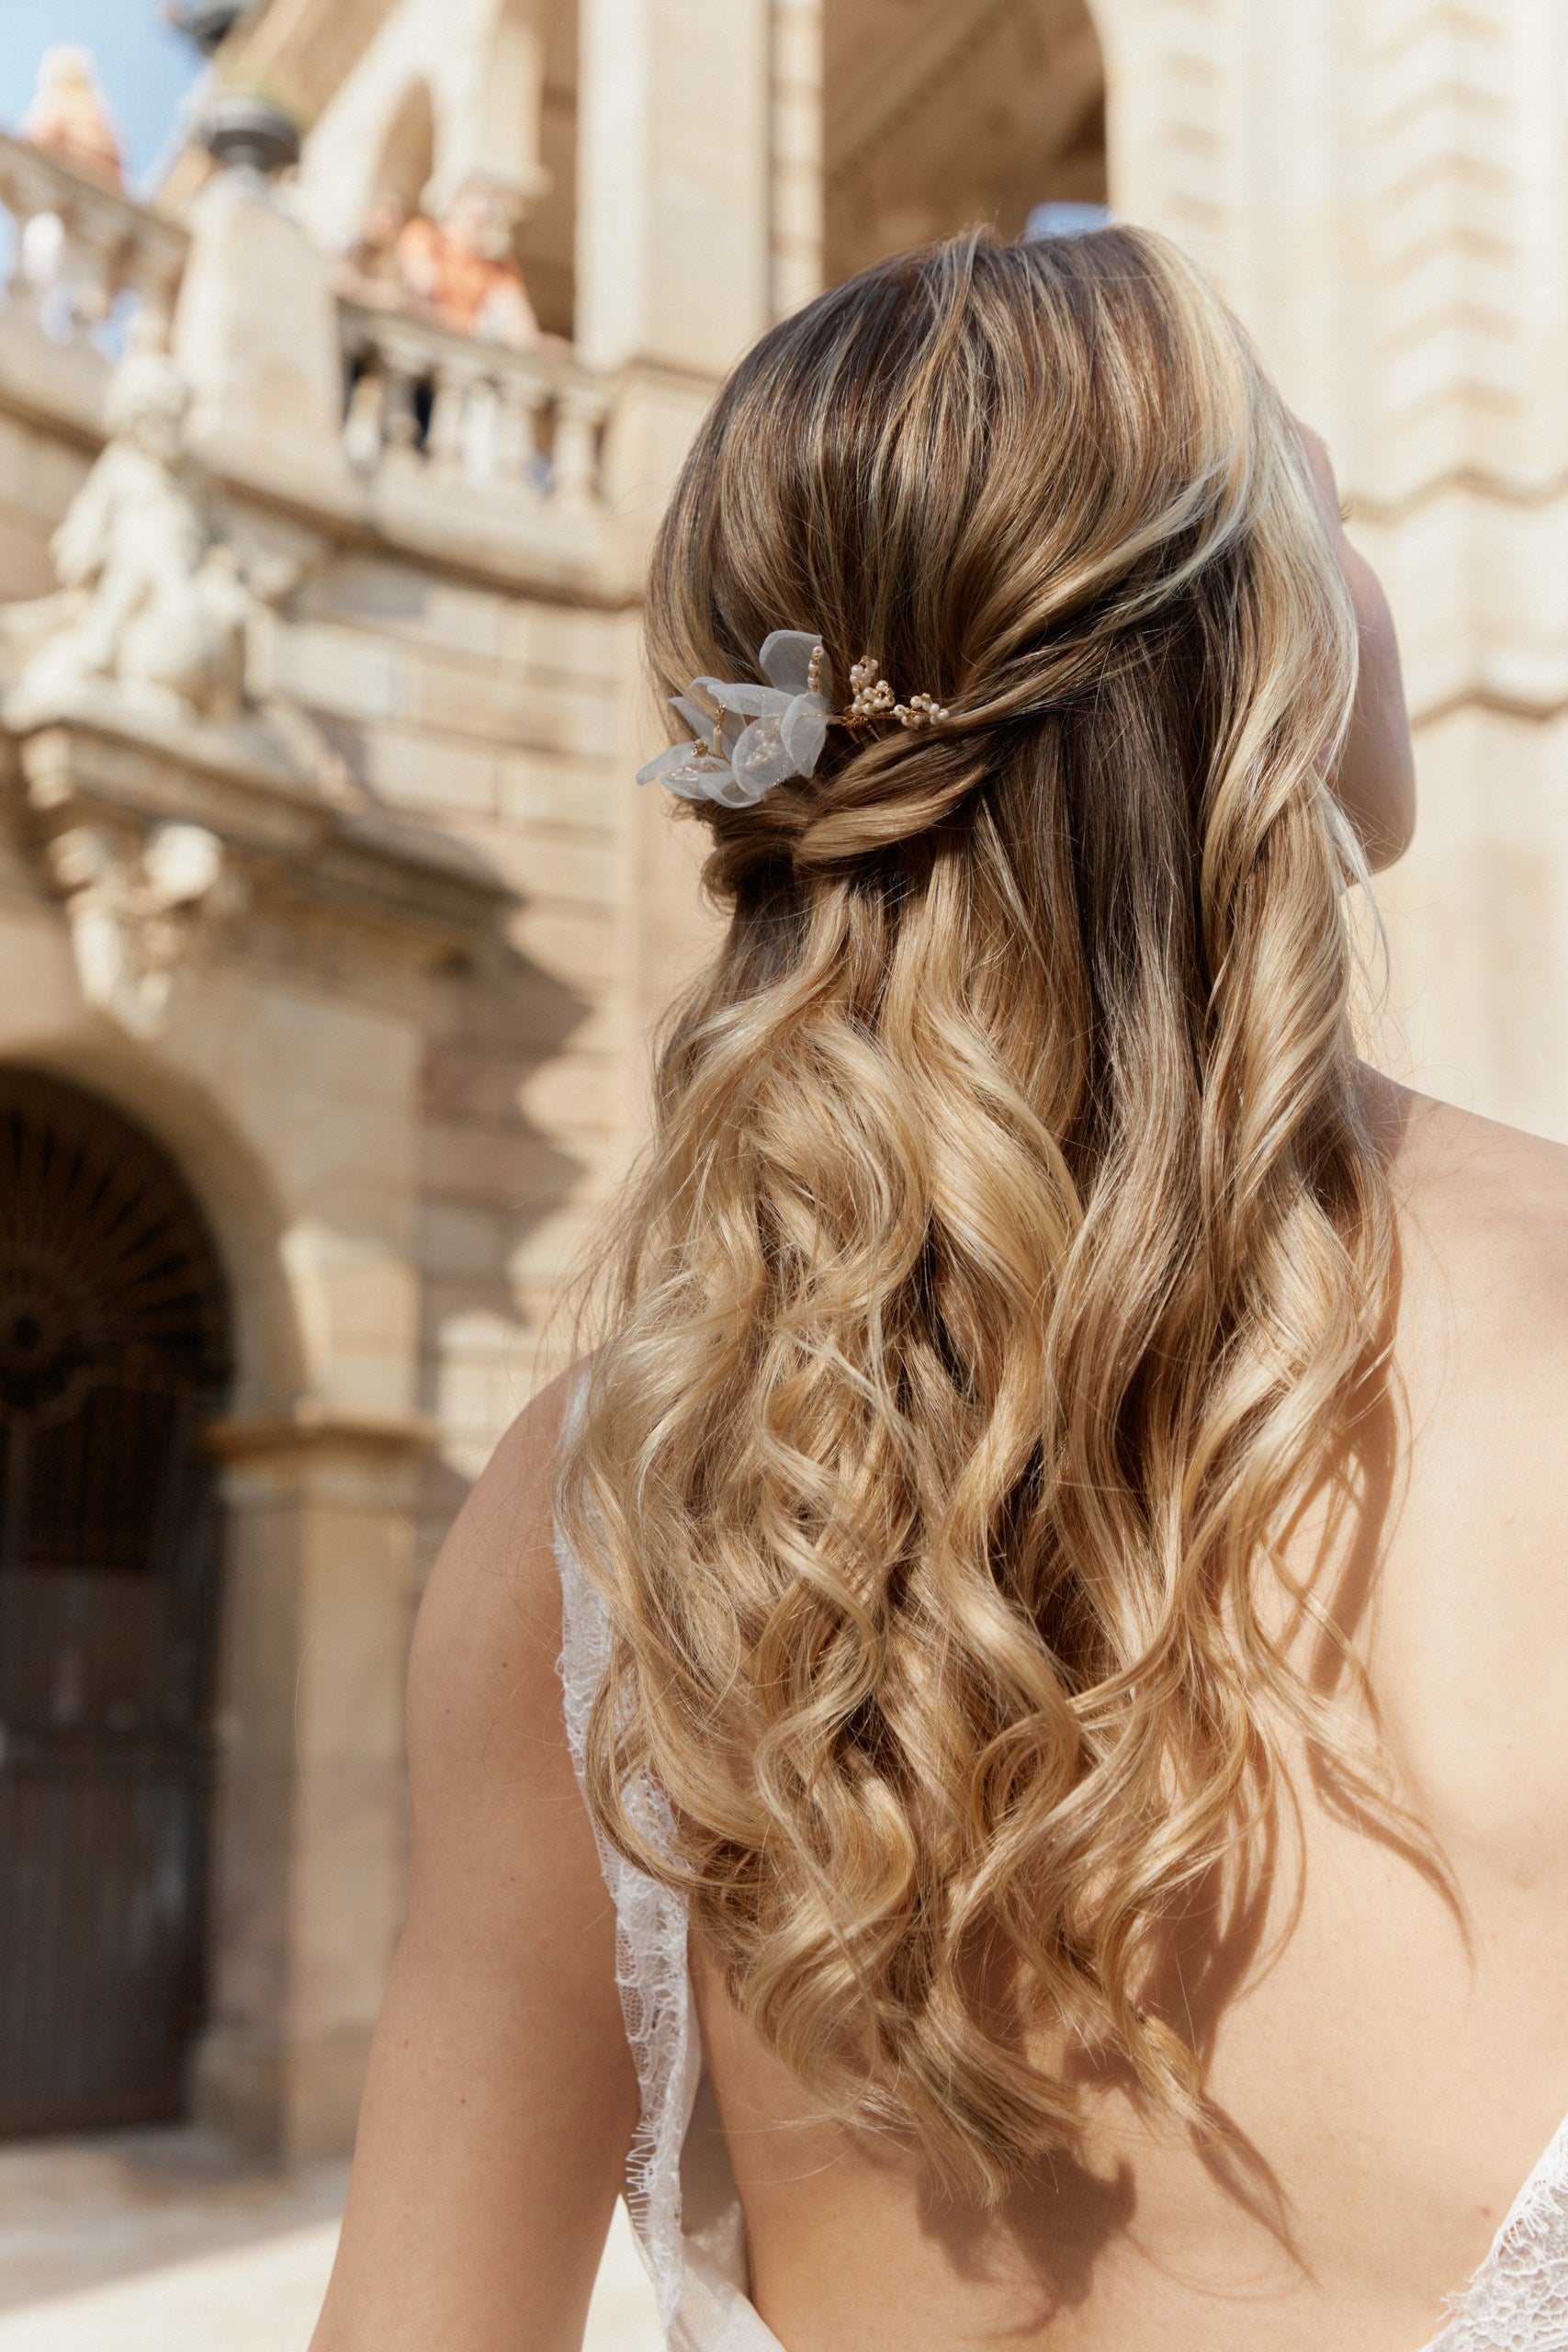 Floral wedding hair accessories